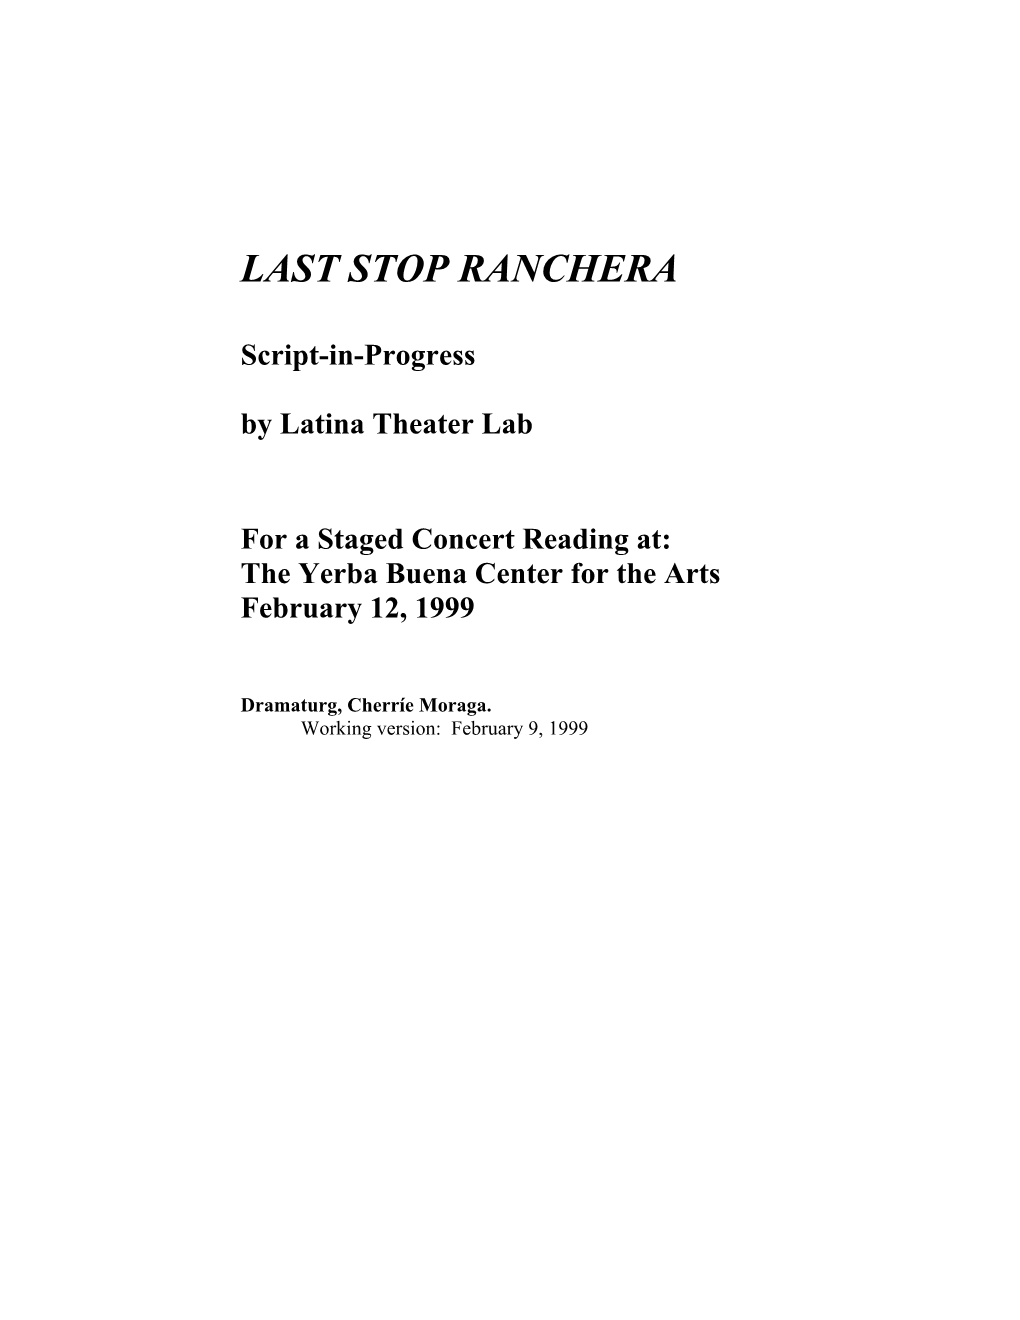 Last Stop Ranchara Staged Reading Script (239.48